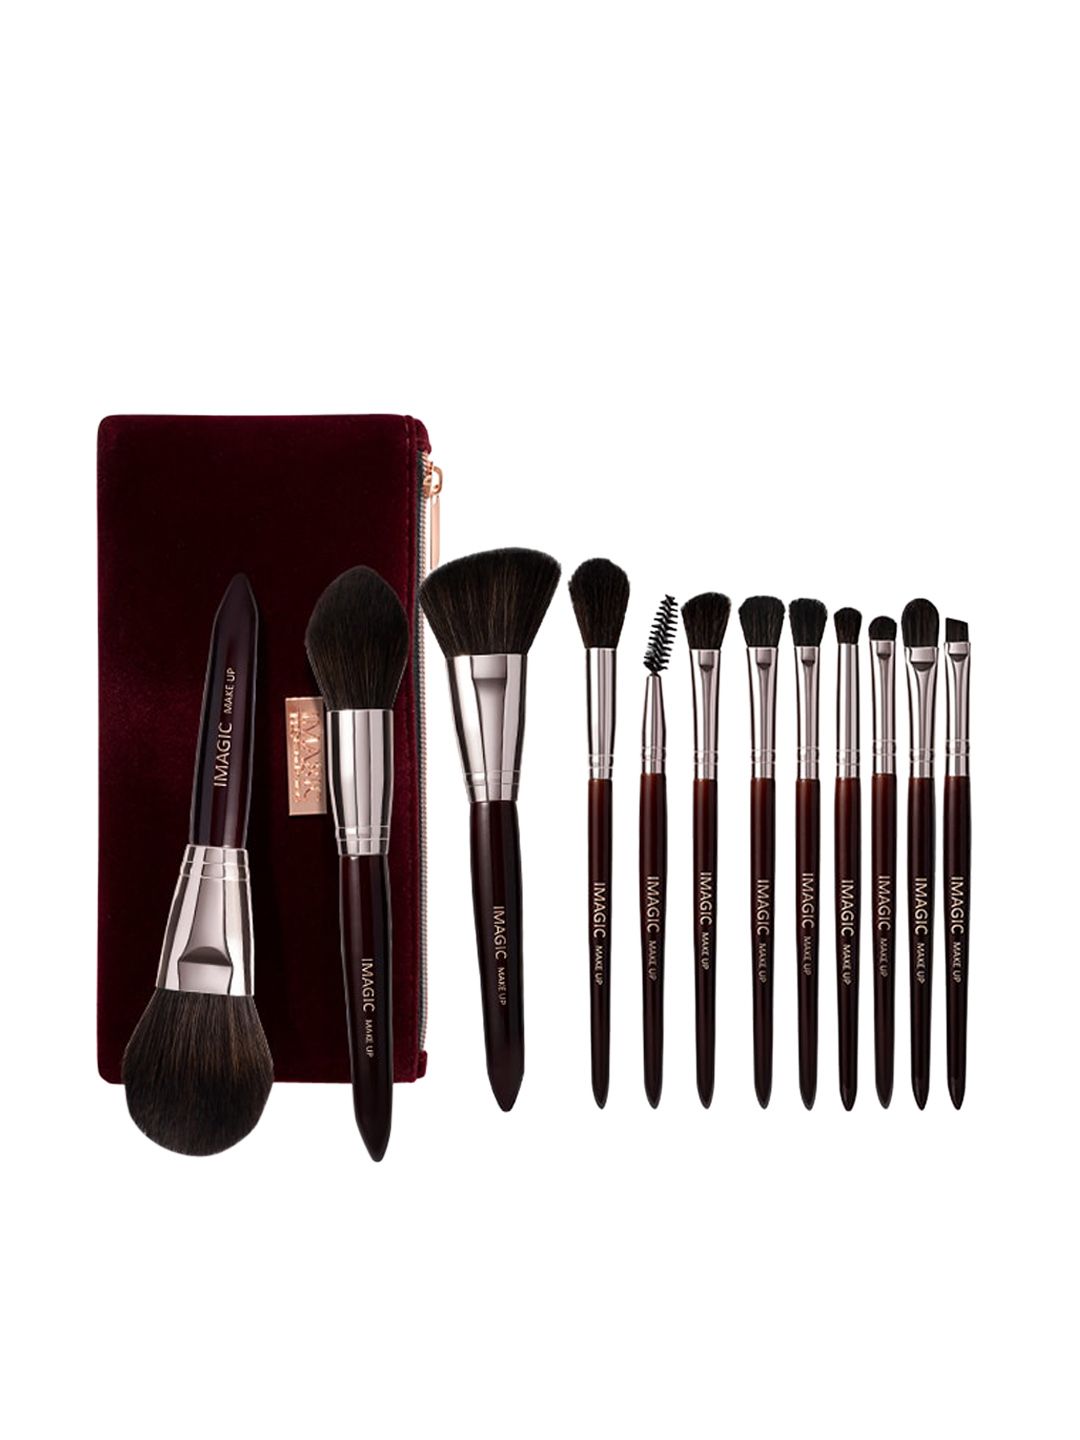 IMAGIC PROfessional Cosmetics 12 Pcs Makeup Brush Set with Black Zipper Bag - TL-445 Price in India